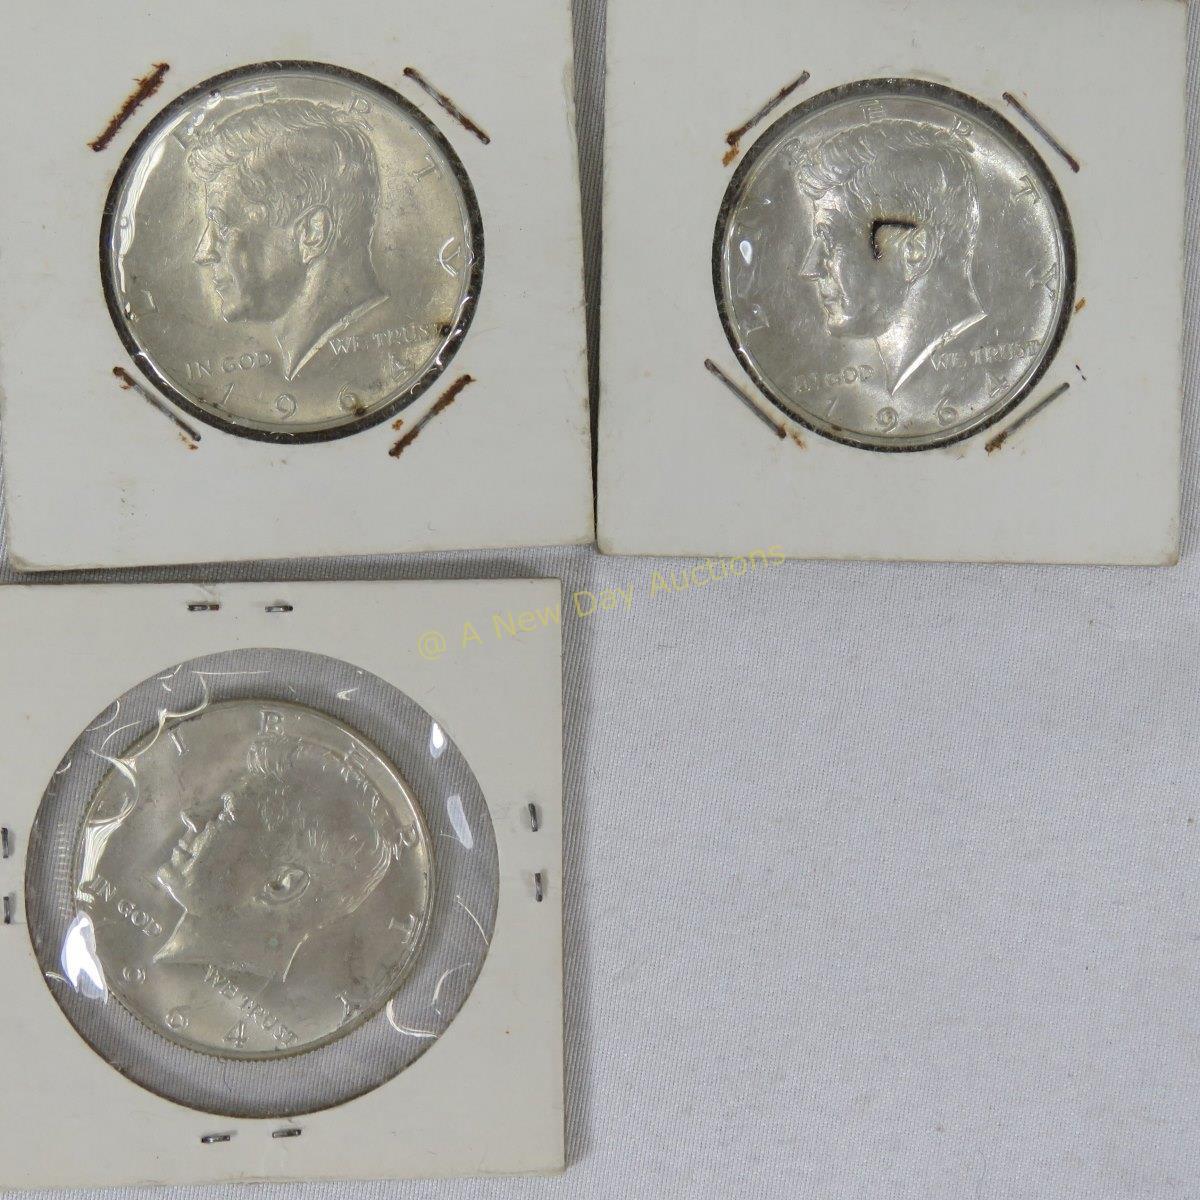 $10 Face mixed 90% silver US coins